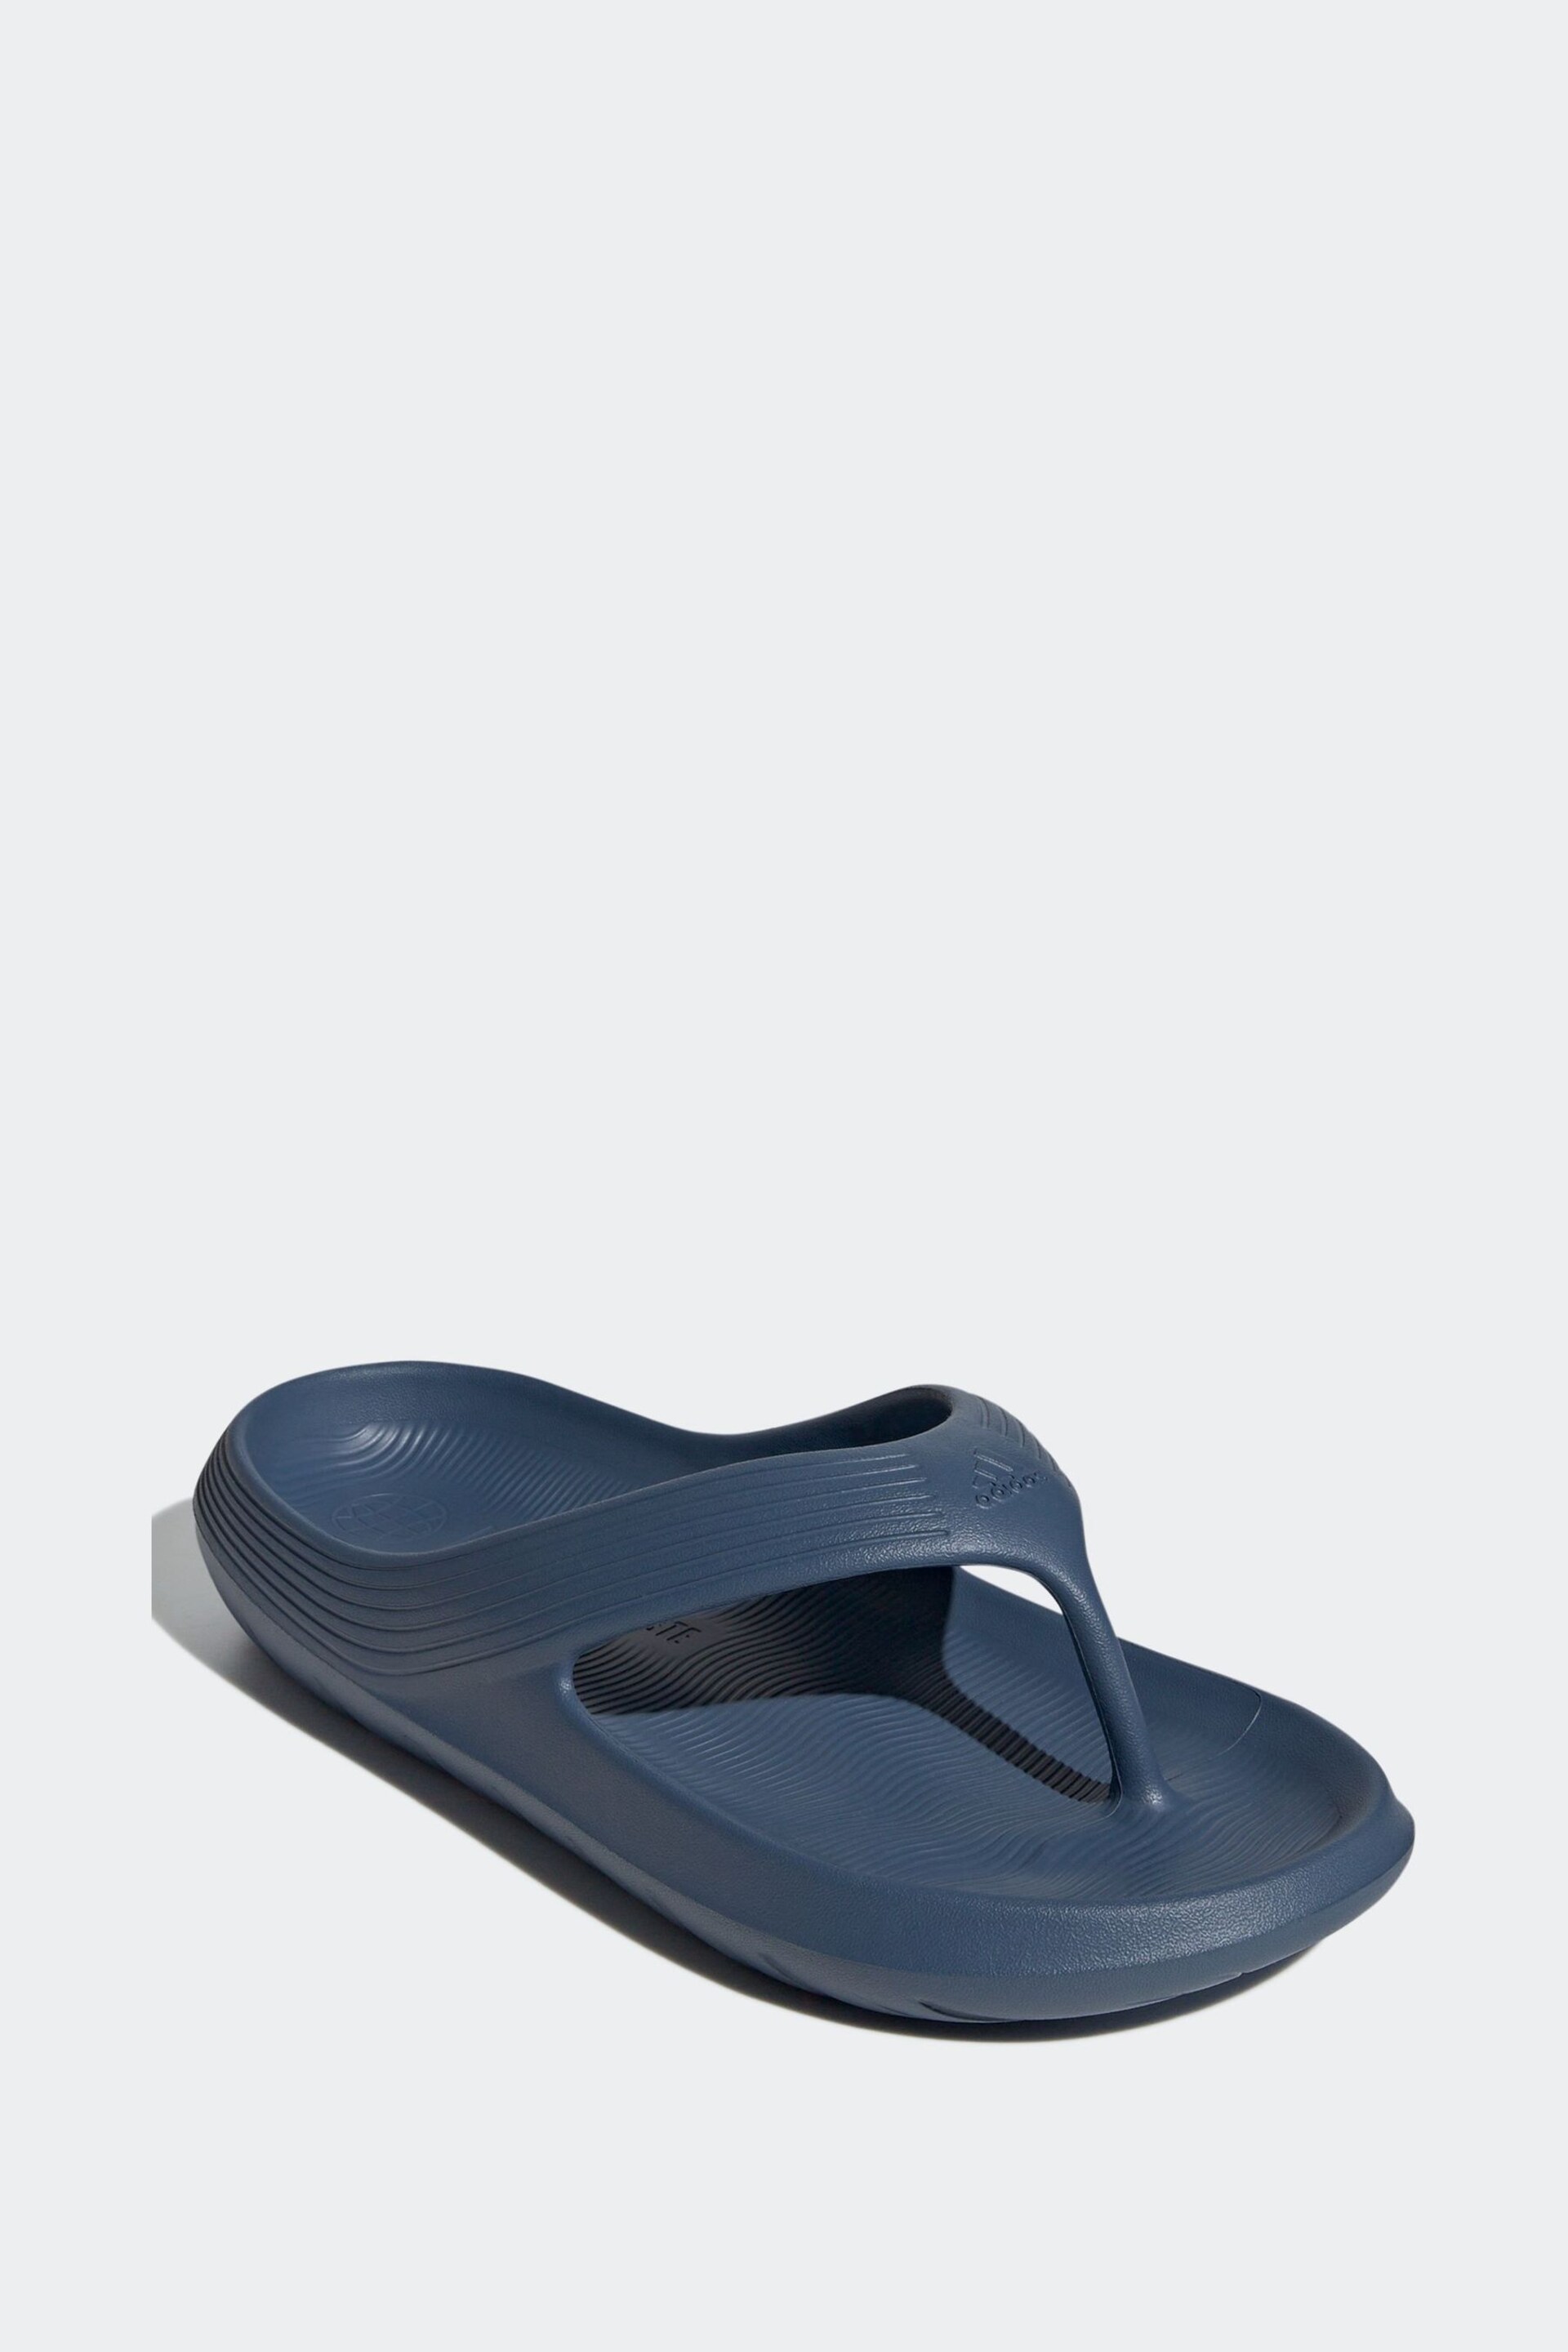 adidas Blue Sportswear Adicane Flip Flops - Image 3 of 8